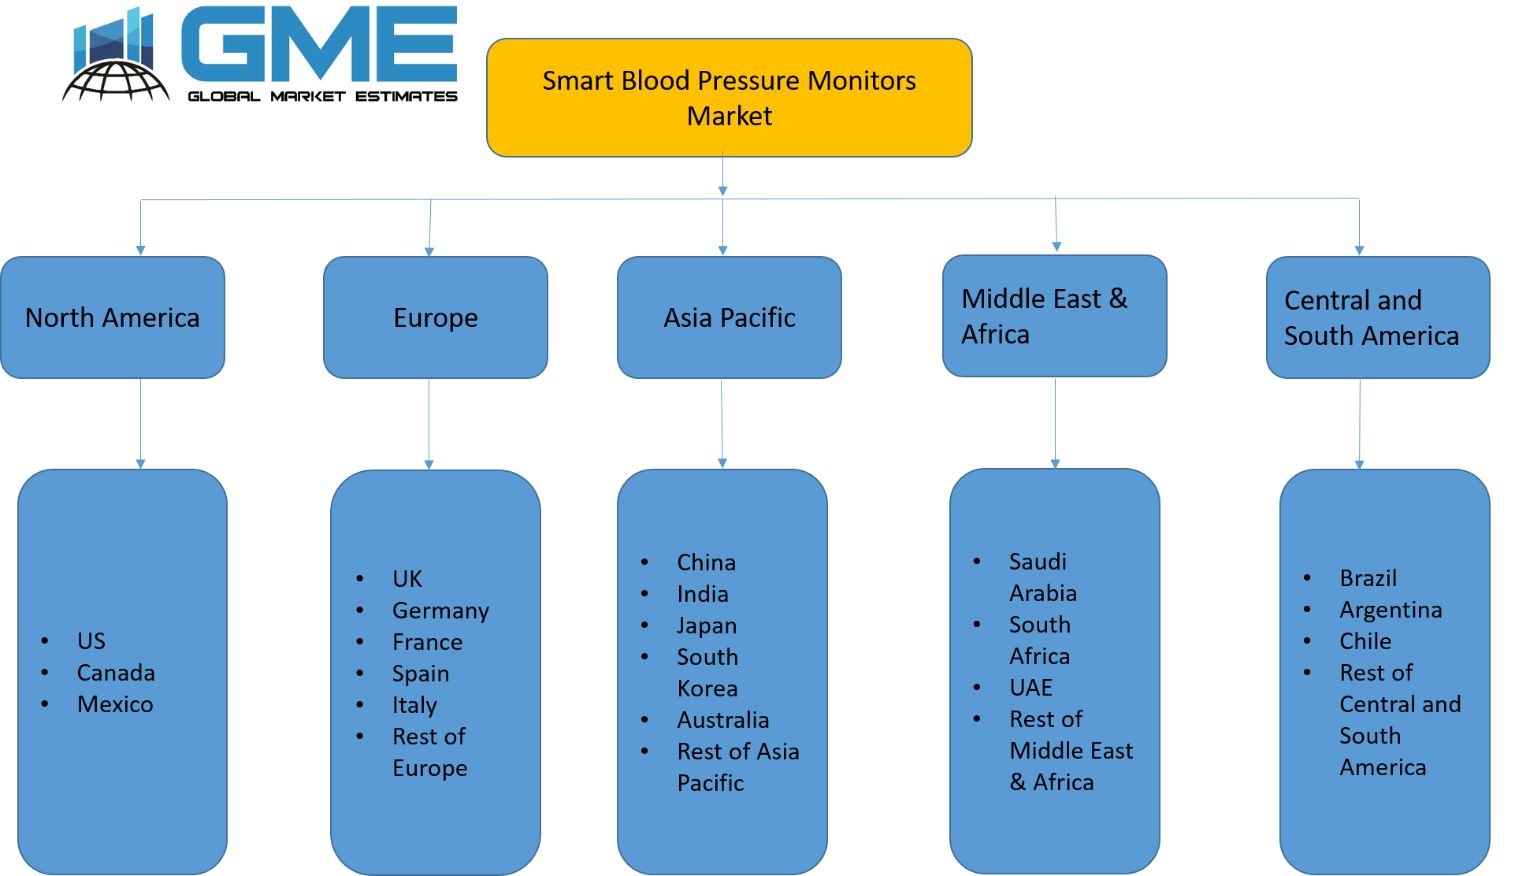 Smart Blood Pressure Monitors Market - Regional Analysis